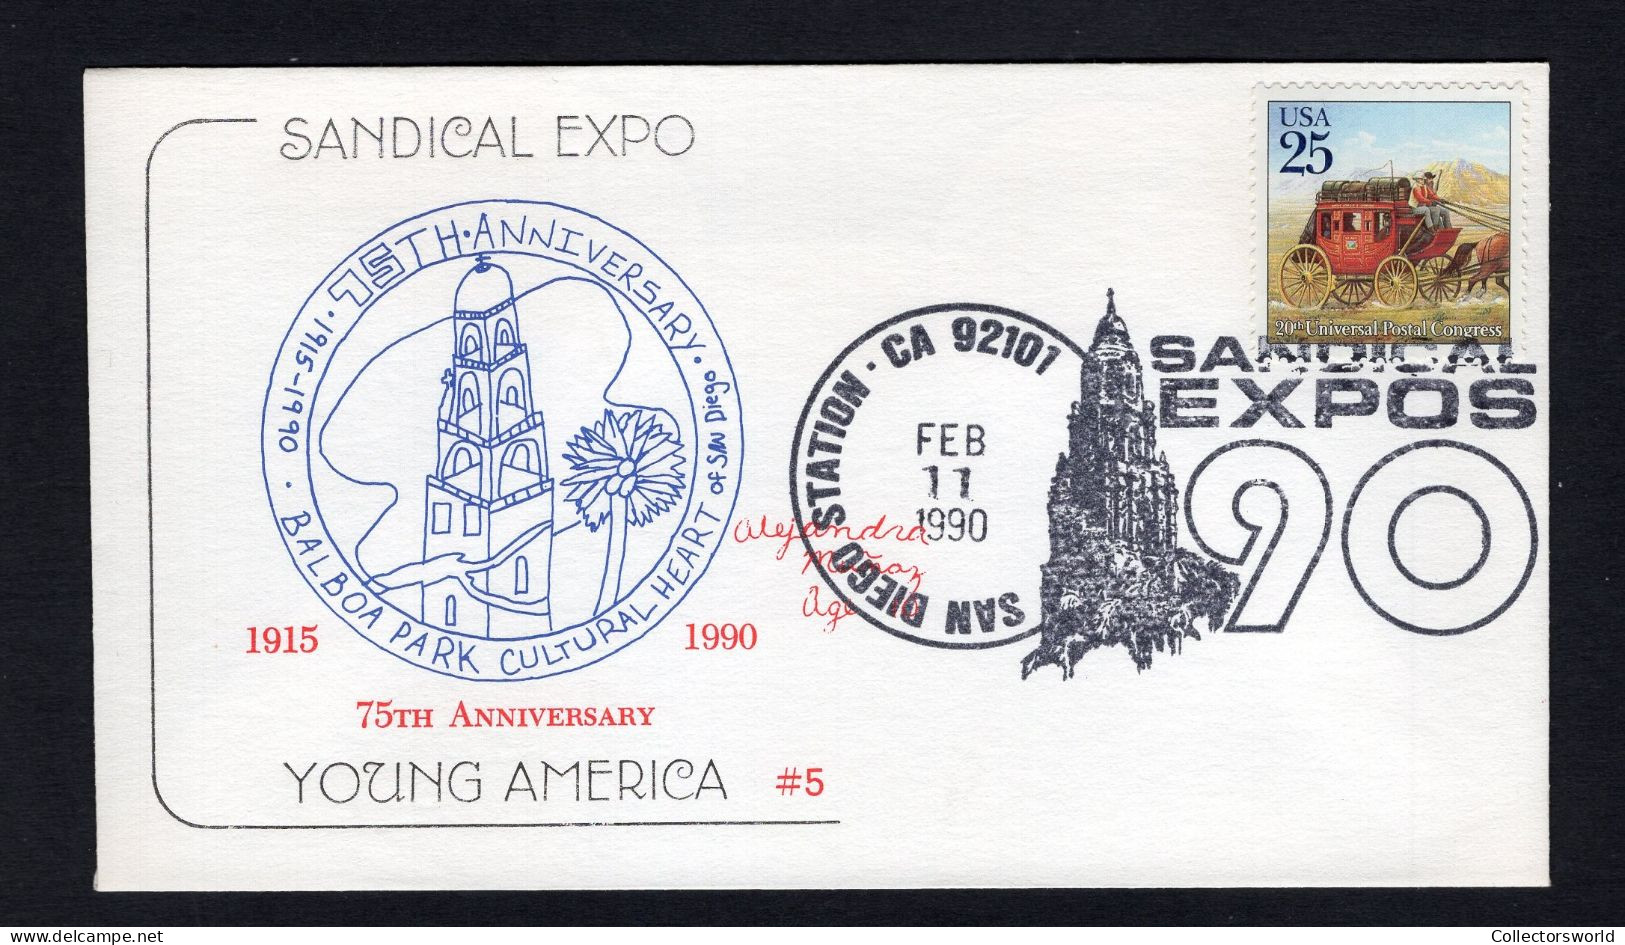 USA 1990 FDC Sandical Expo - Balboa Park Cultural Heart - FDC